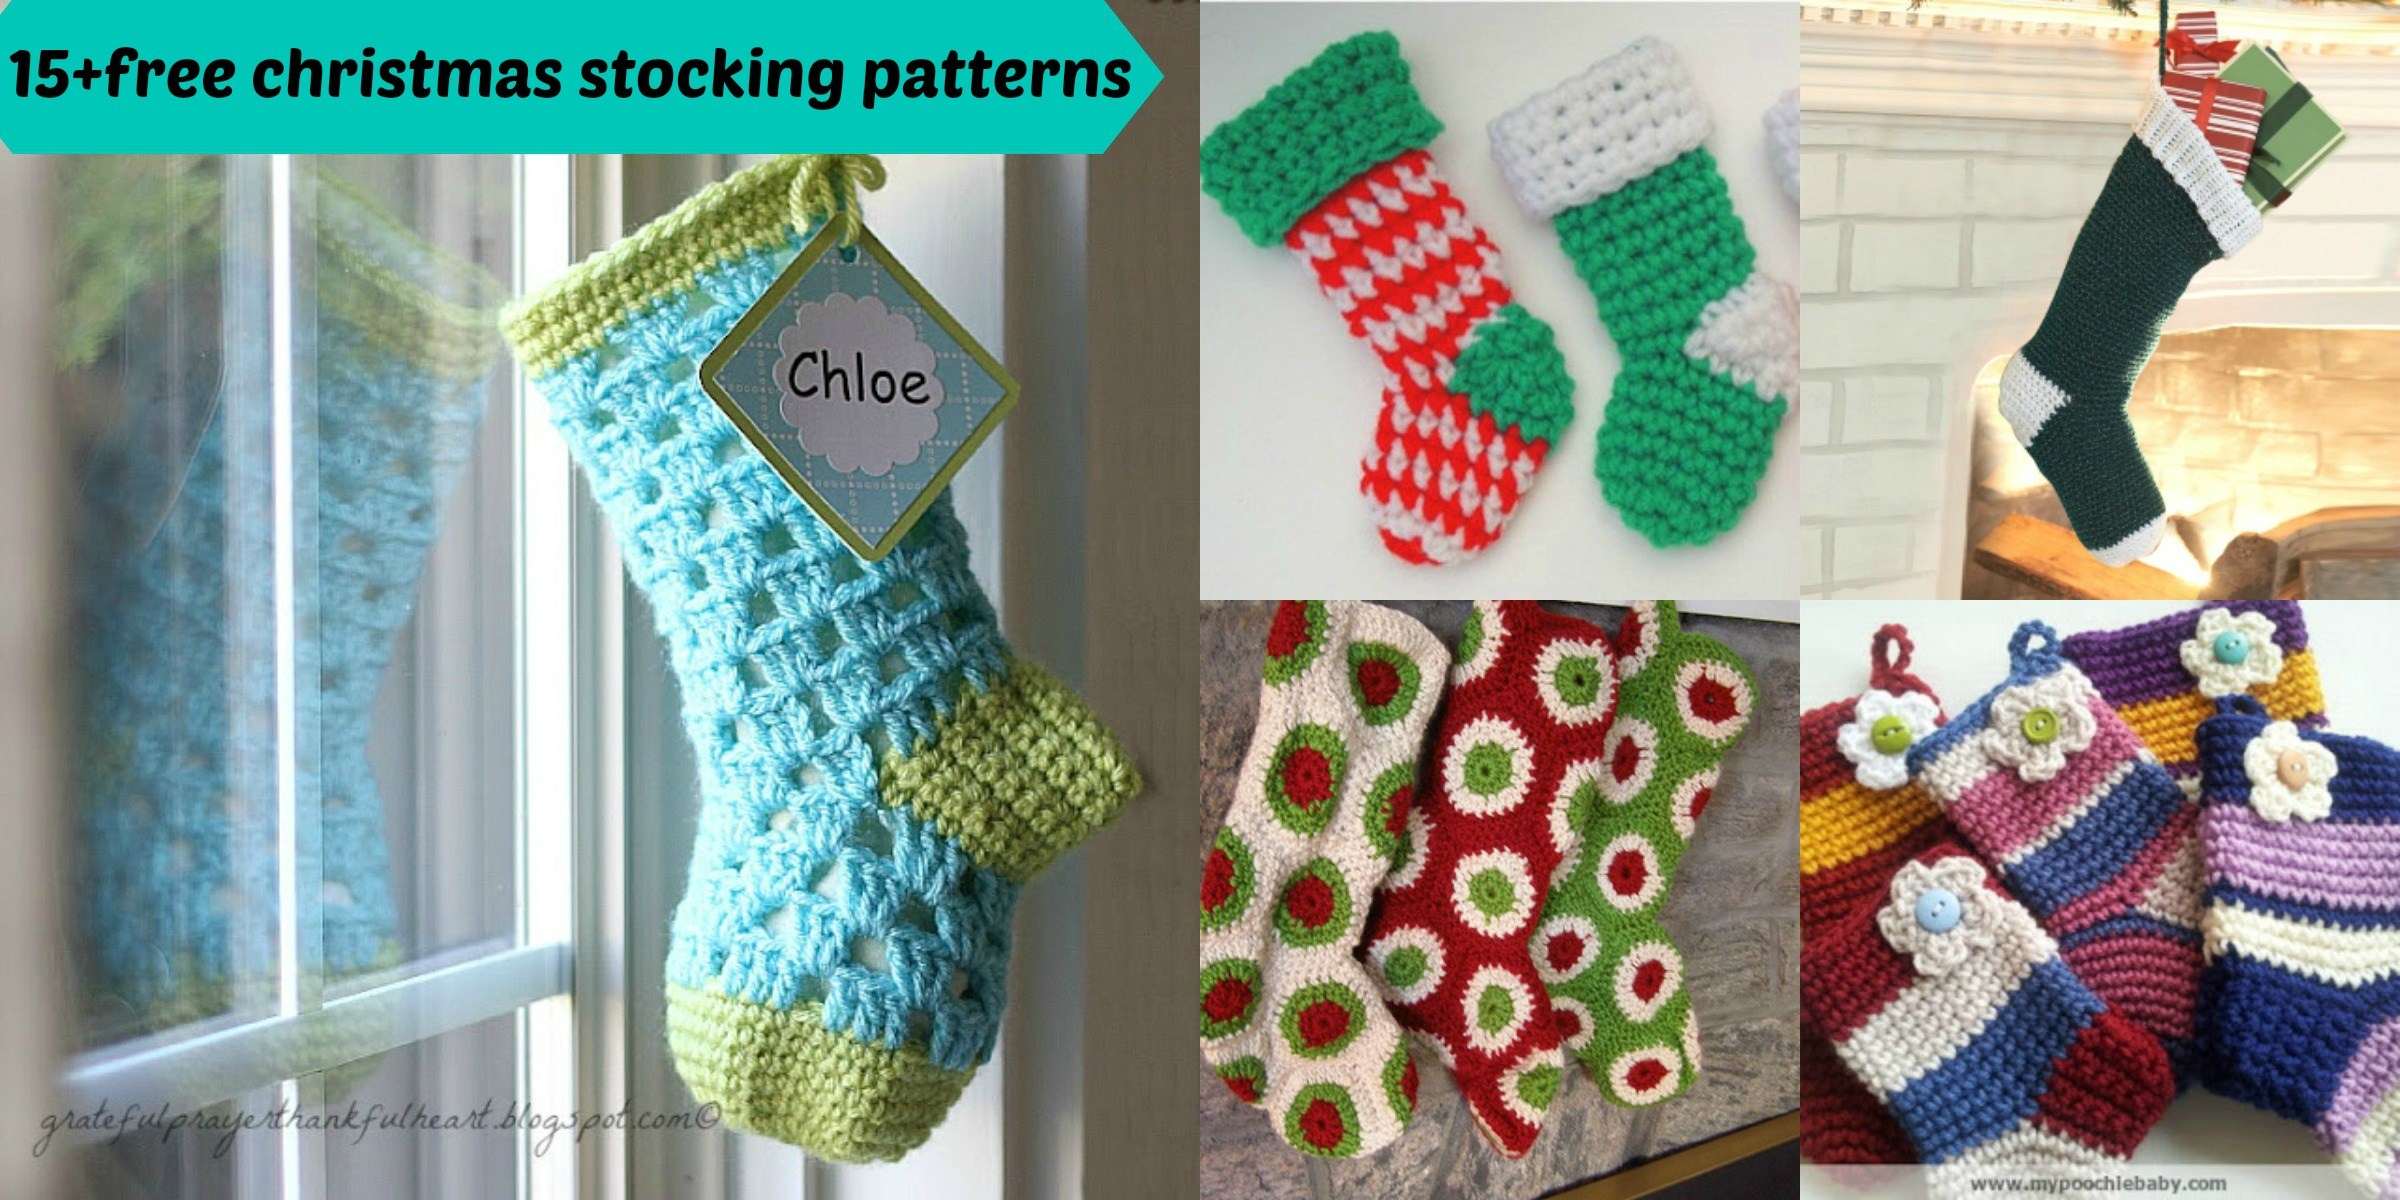 15+free crochet christmas stocking patterns iotugqg